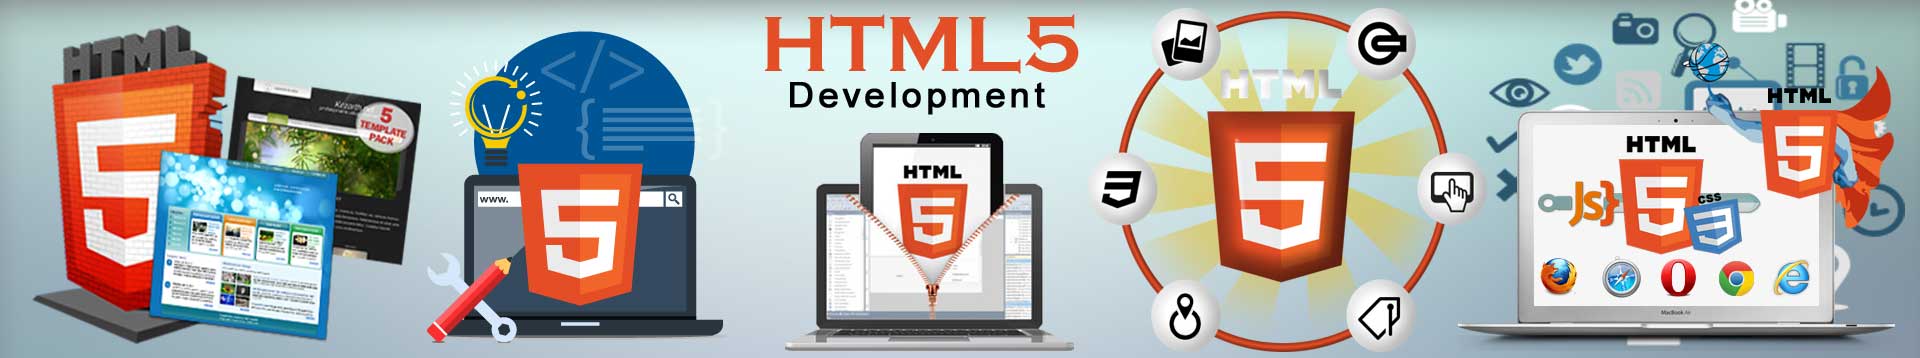 html5-development-services-banner